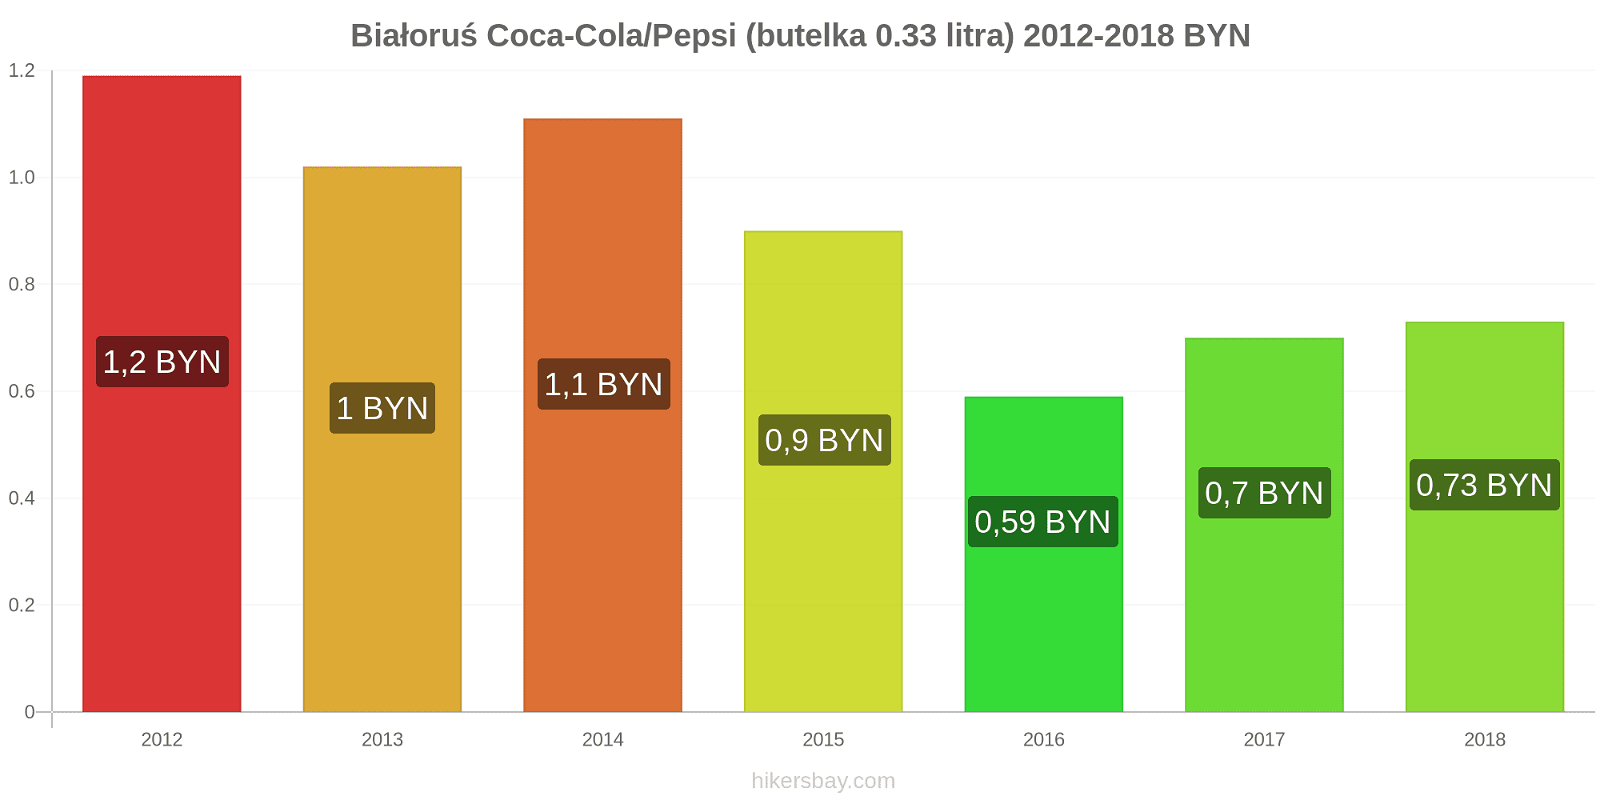 Białoruś zmiany cen Coca-Cola/Pepsi (butelka 0.33 litra) hikersbay.com